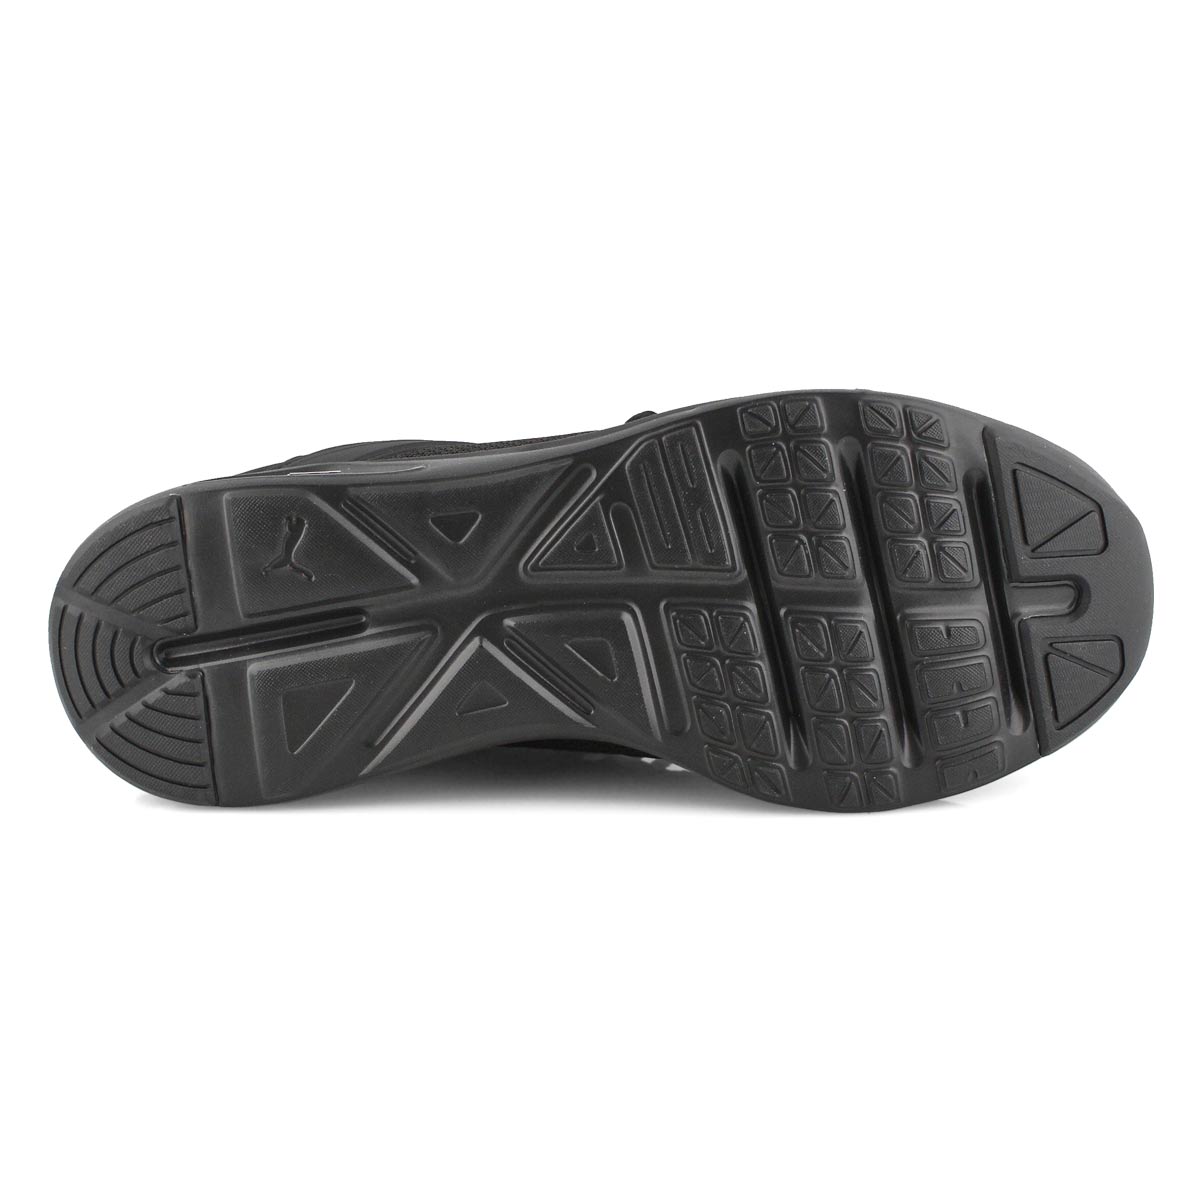 Puma Men's Enzo 2 Sneaker - Black | SoftMoc.com